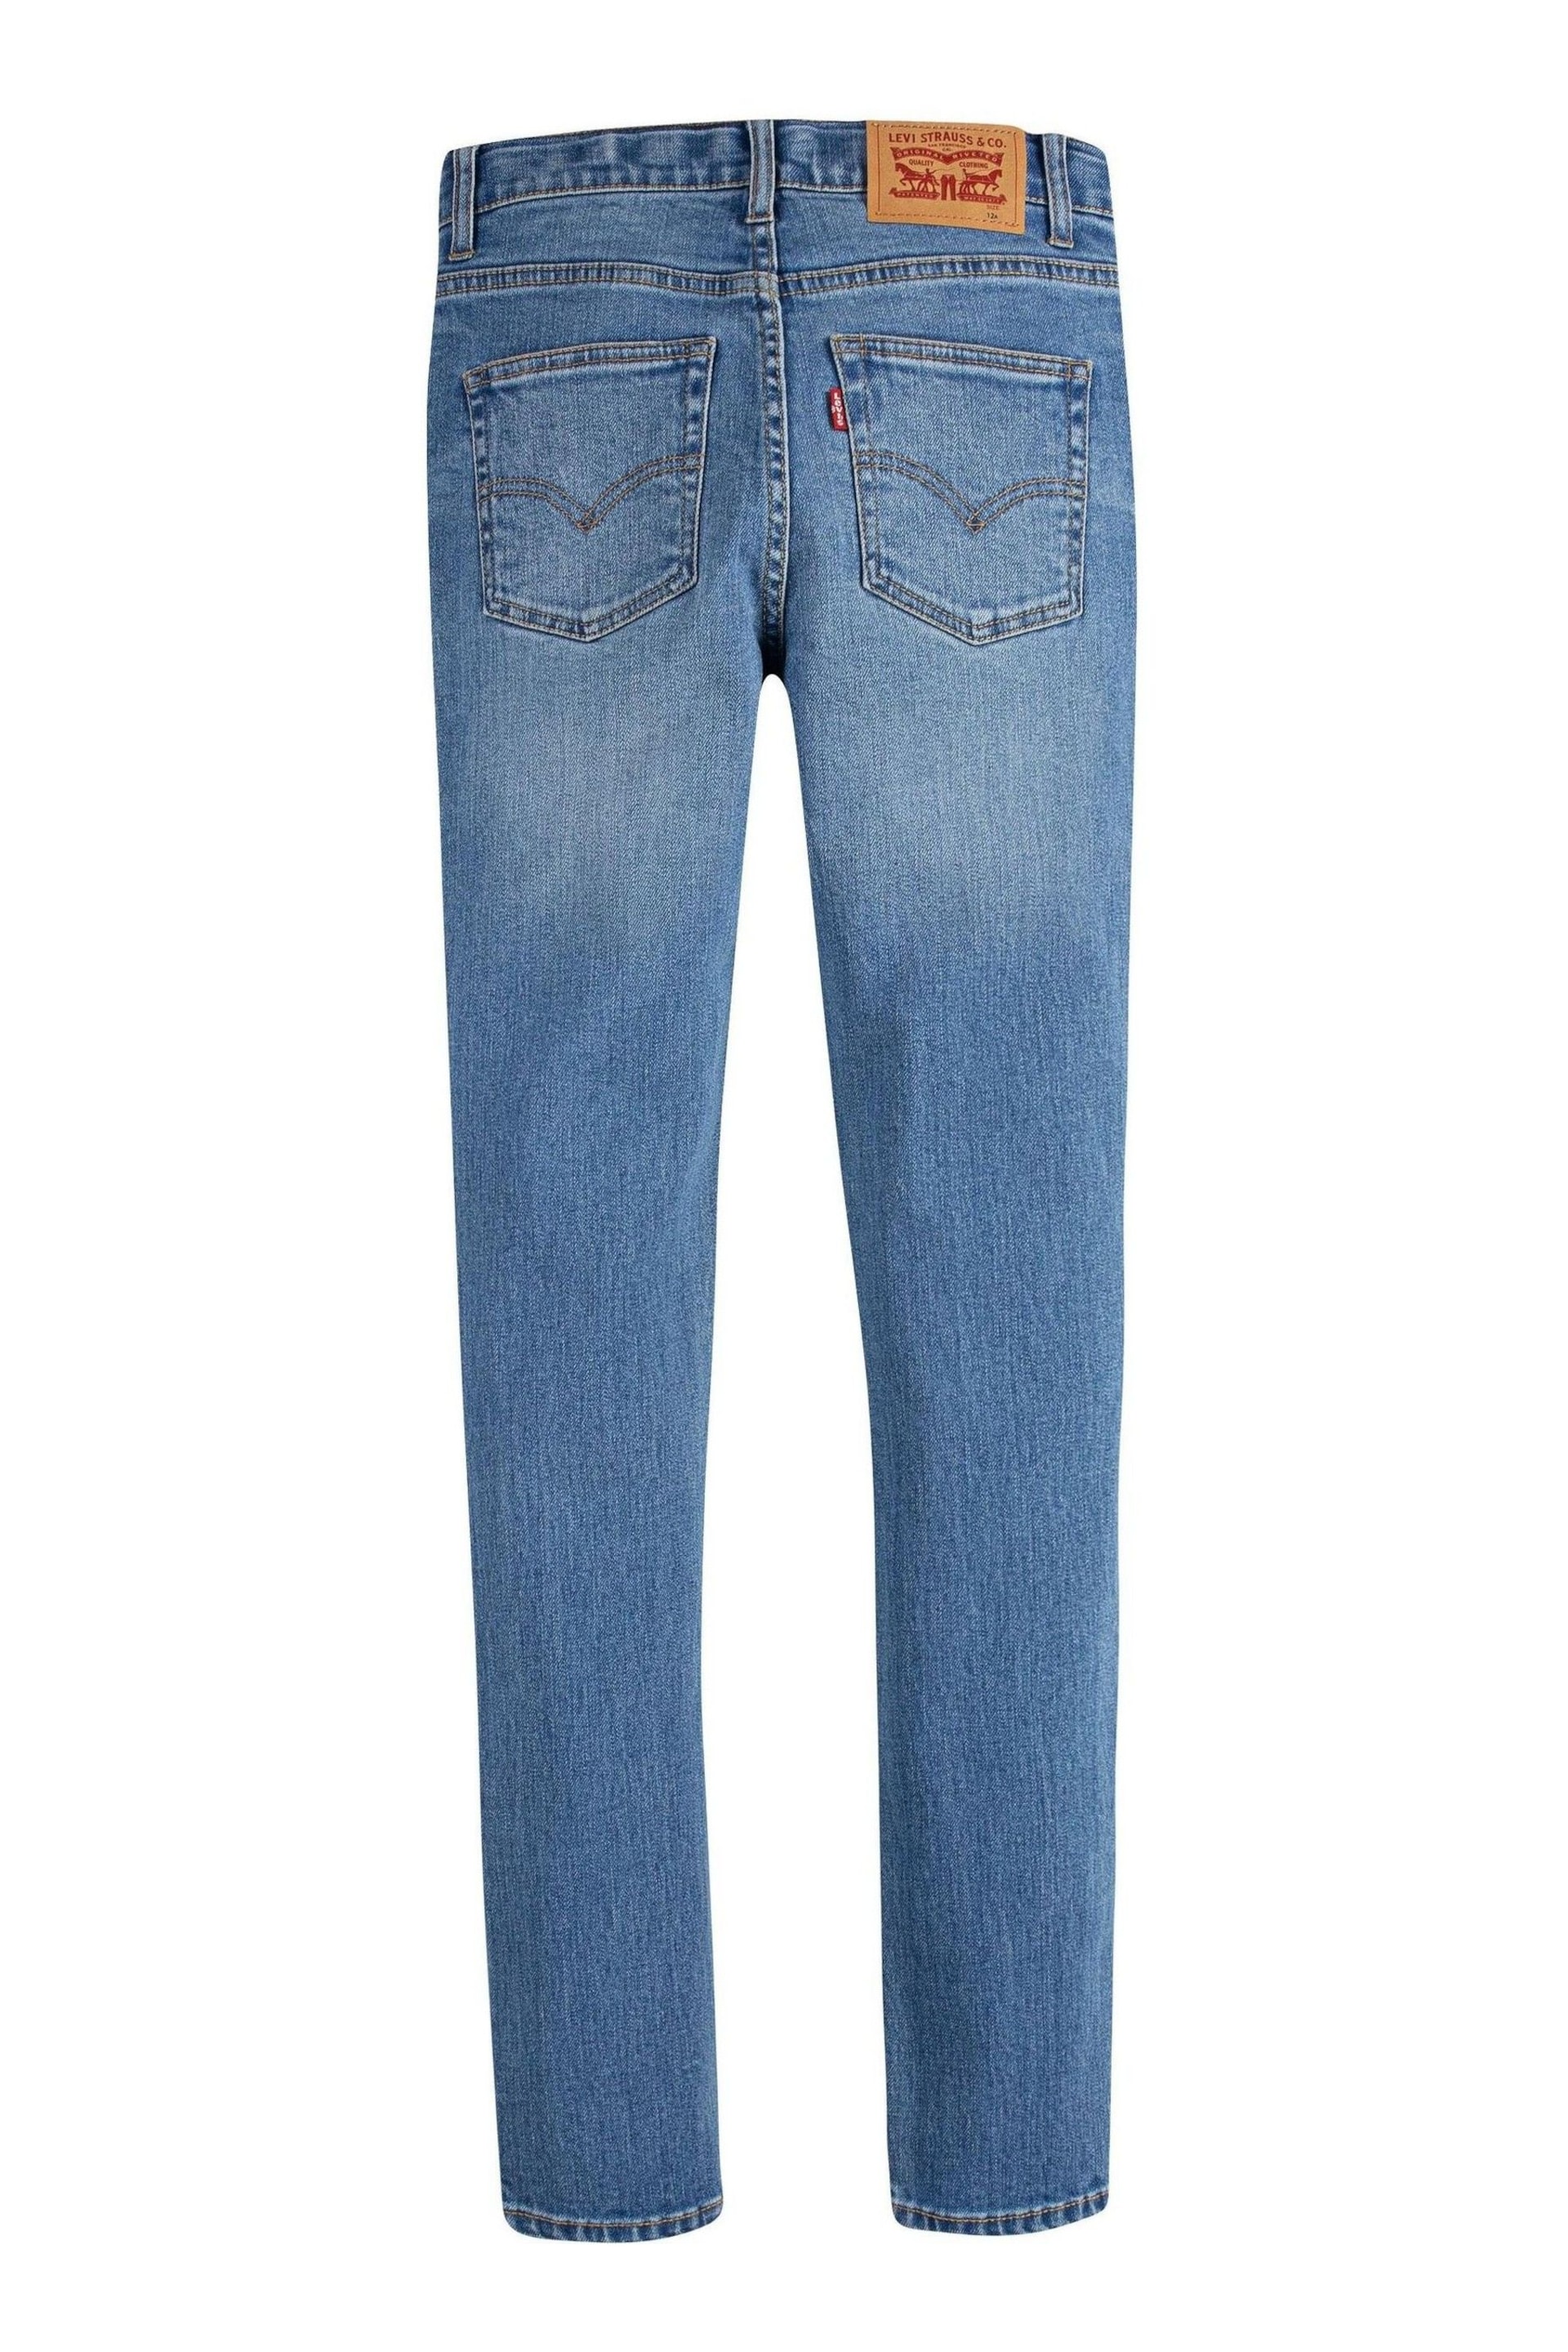 Levi's® Blue Skinny Tapered Denim Jeans - Image 4 of 4